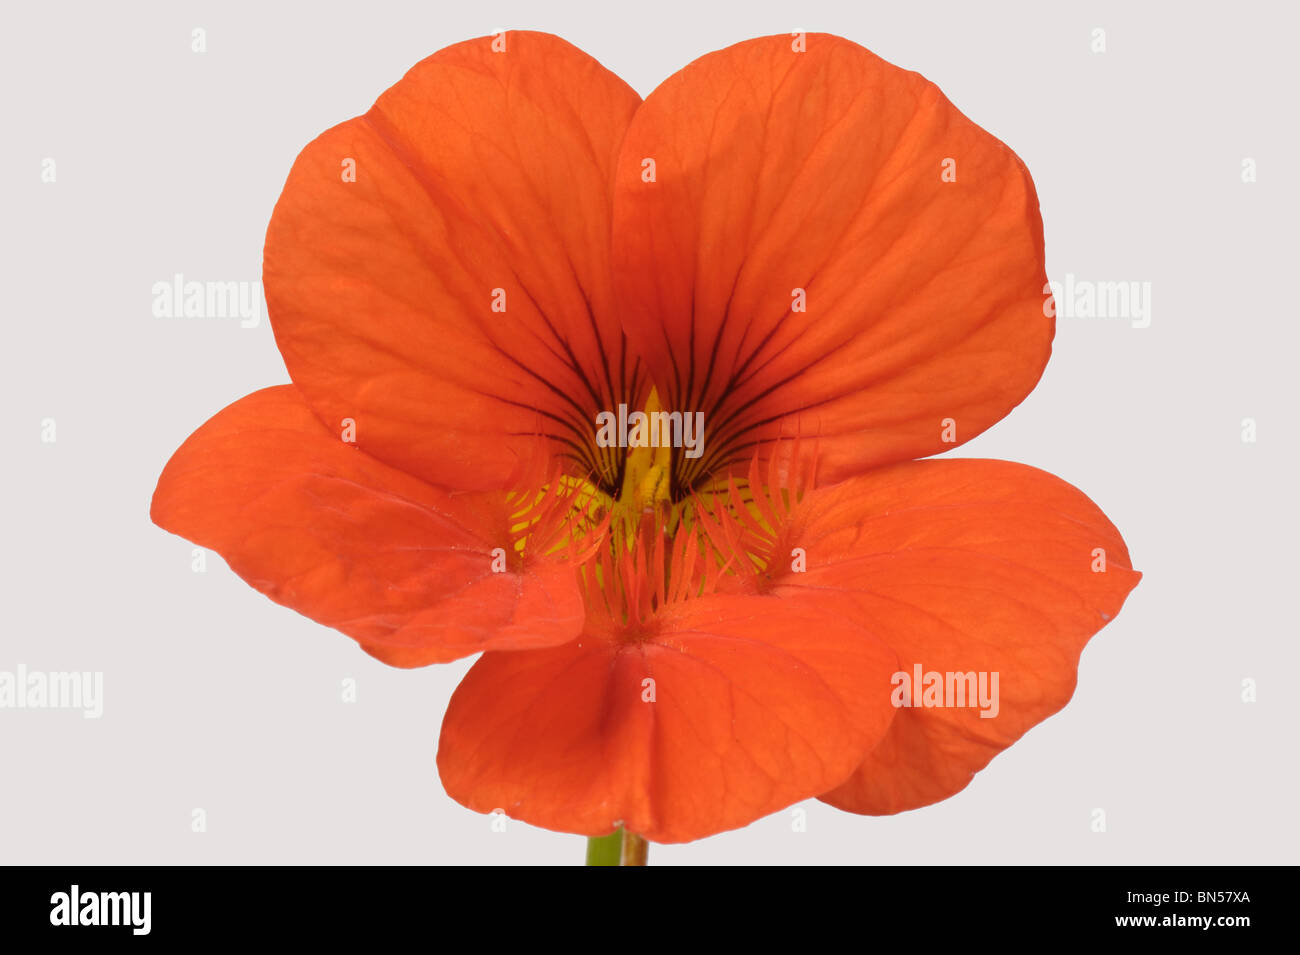 Orange nasturtium flower (Tropaeolum majus) against a white background Stock Photo